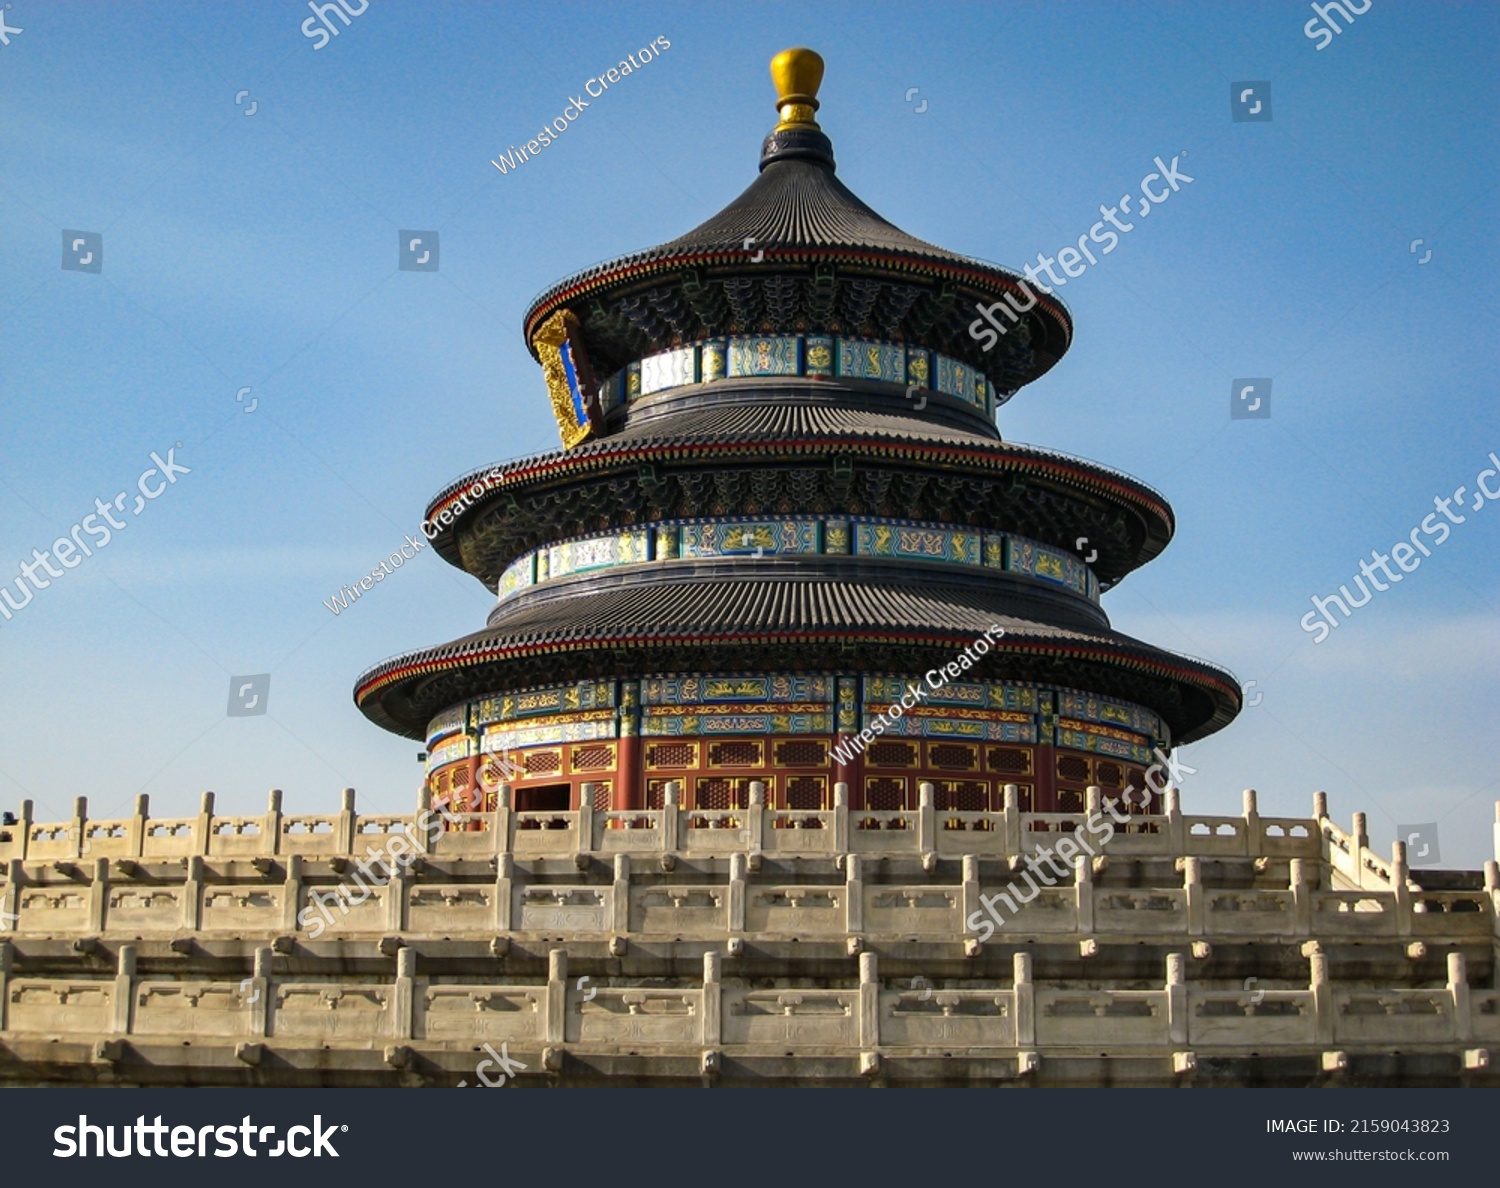 567 Dongcheng district Images, Stock Photos & Vectors | Shutterstock